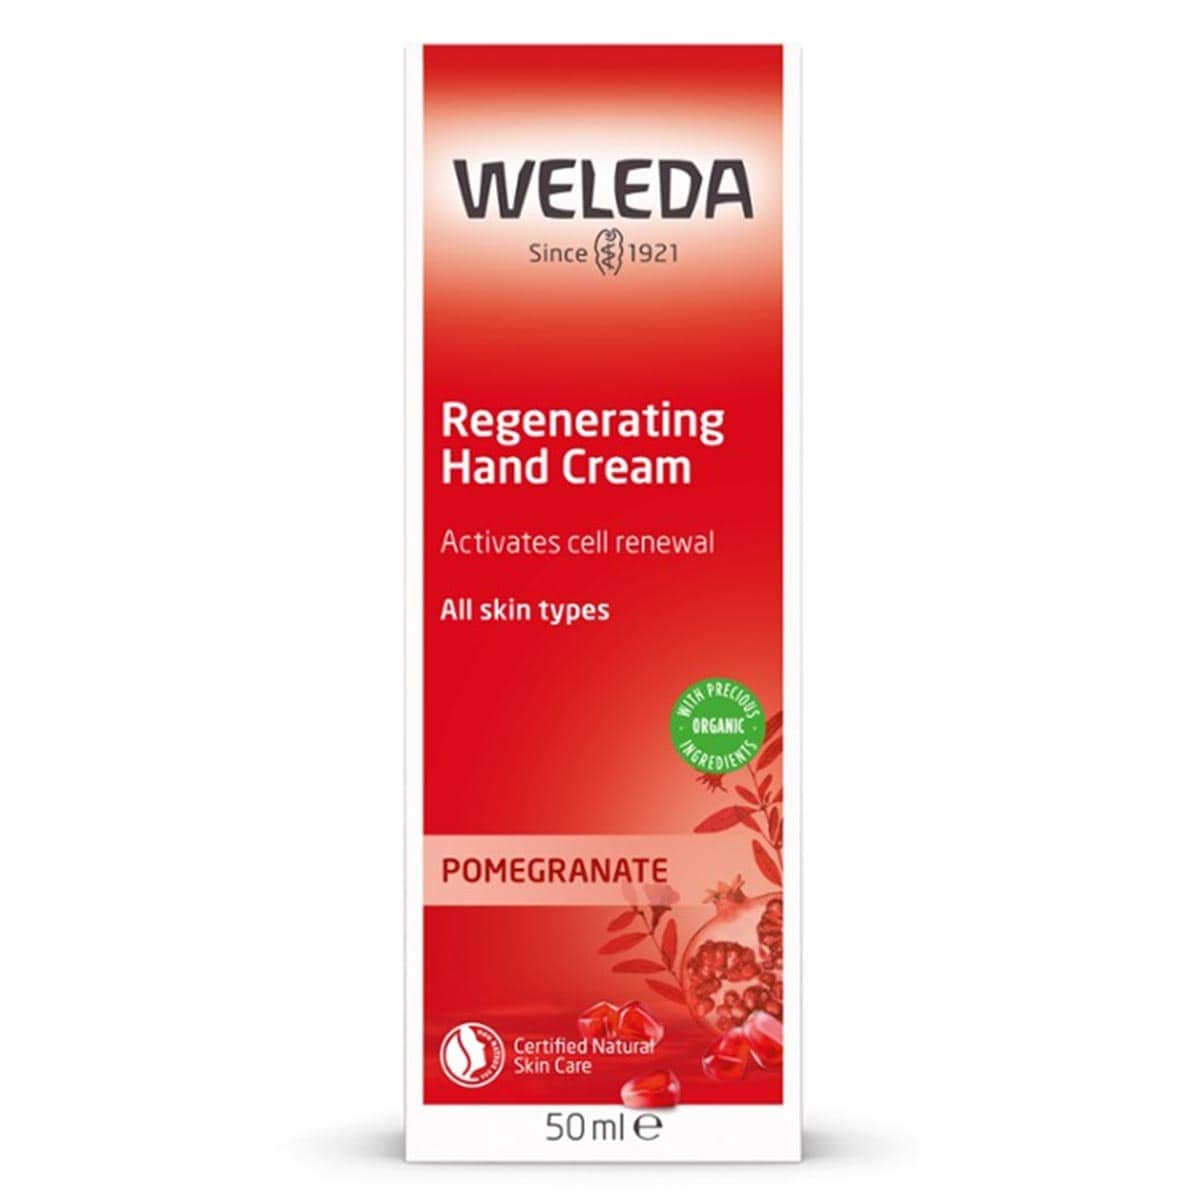 Weleda Pomegranate Regenerating Hand Cream 50ml